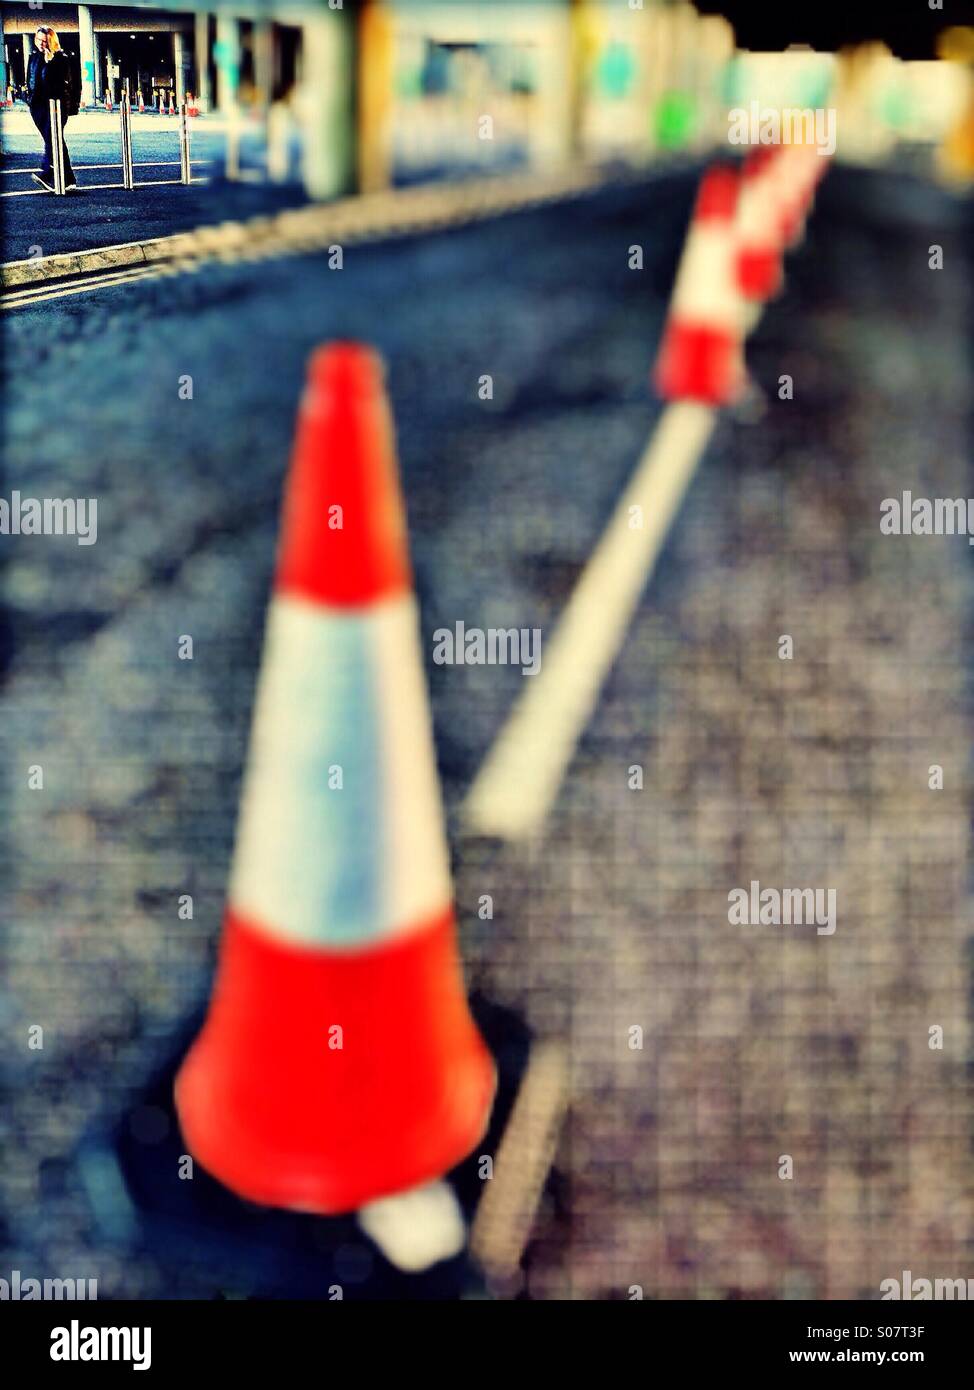 Row of traffic cones, London, UK Stock Photo